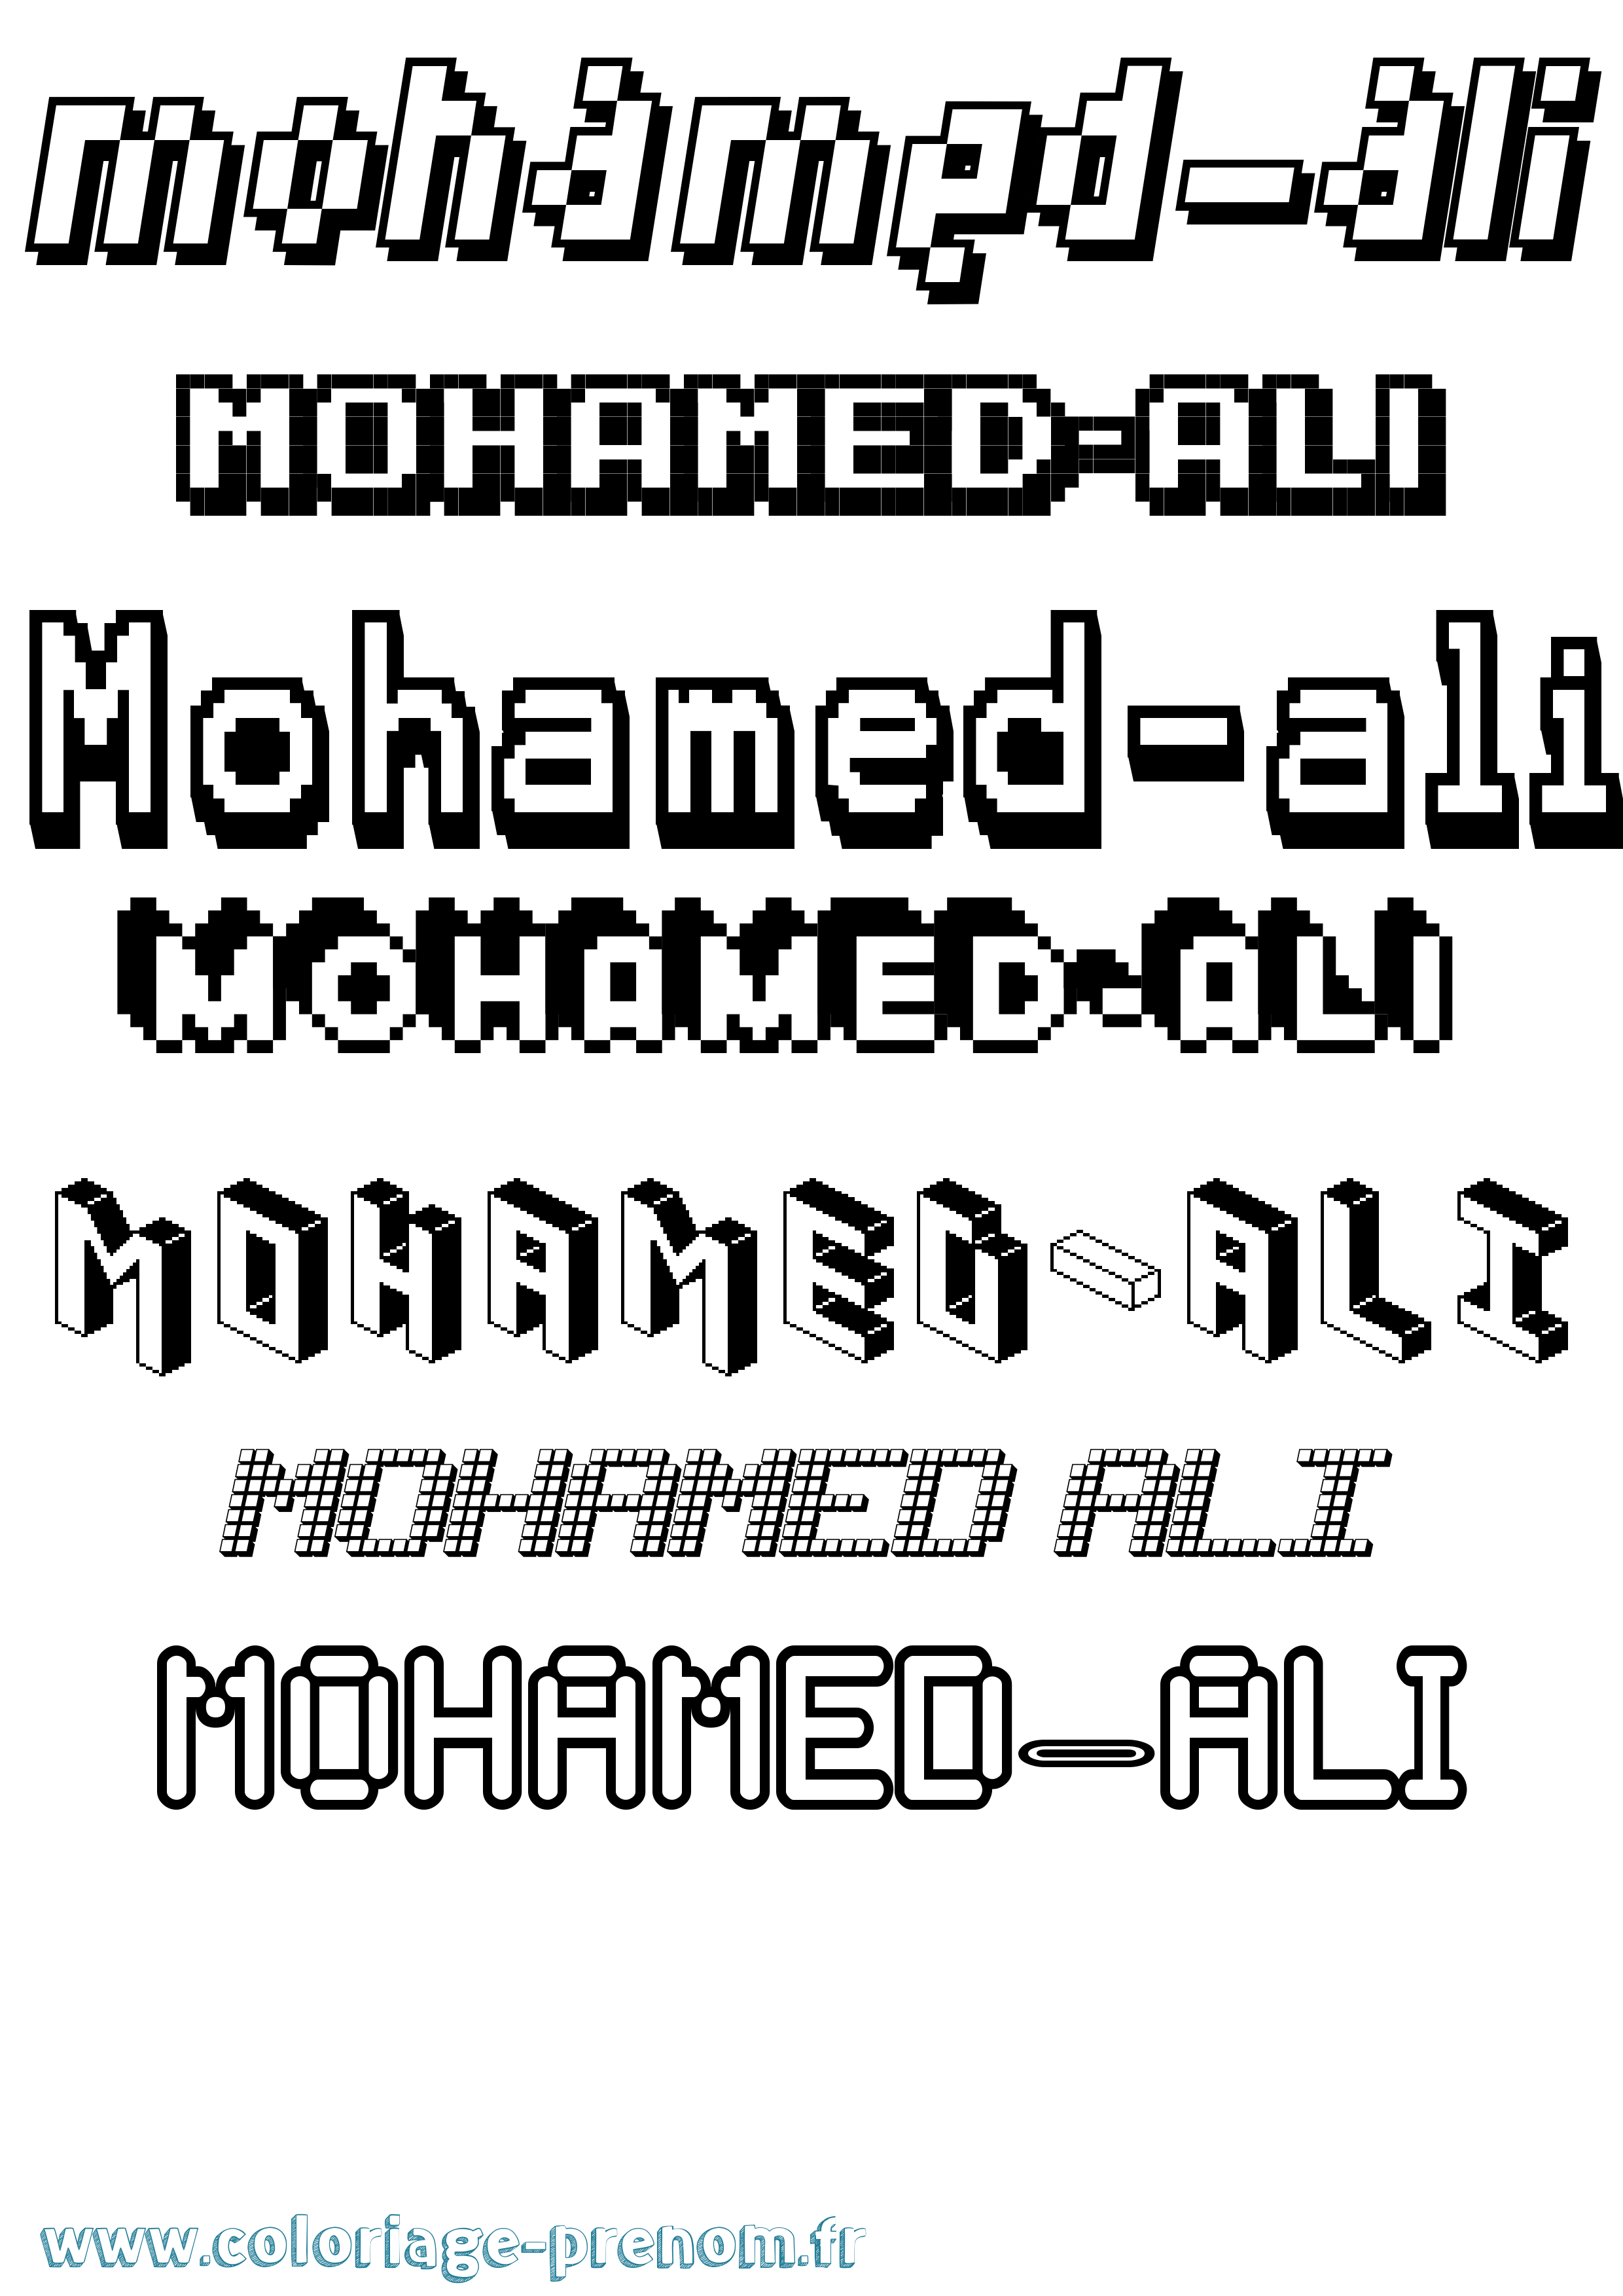 Coloriage prénom Mohamed-Ali